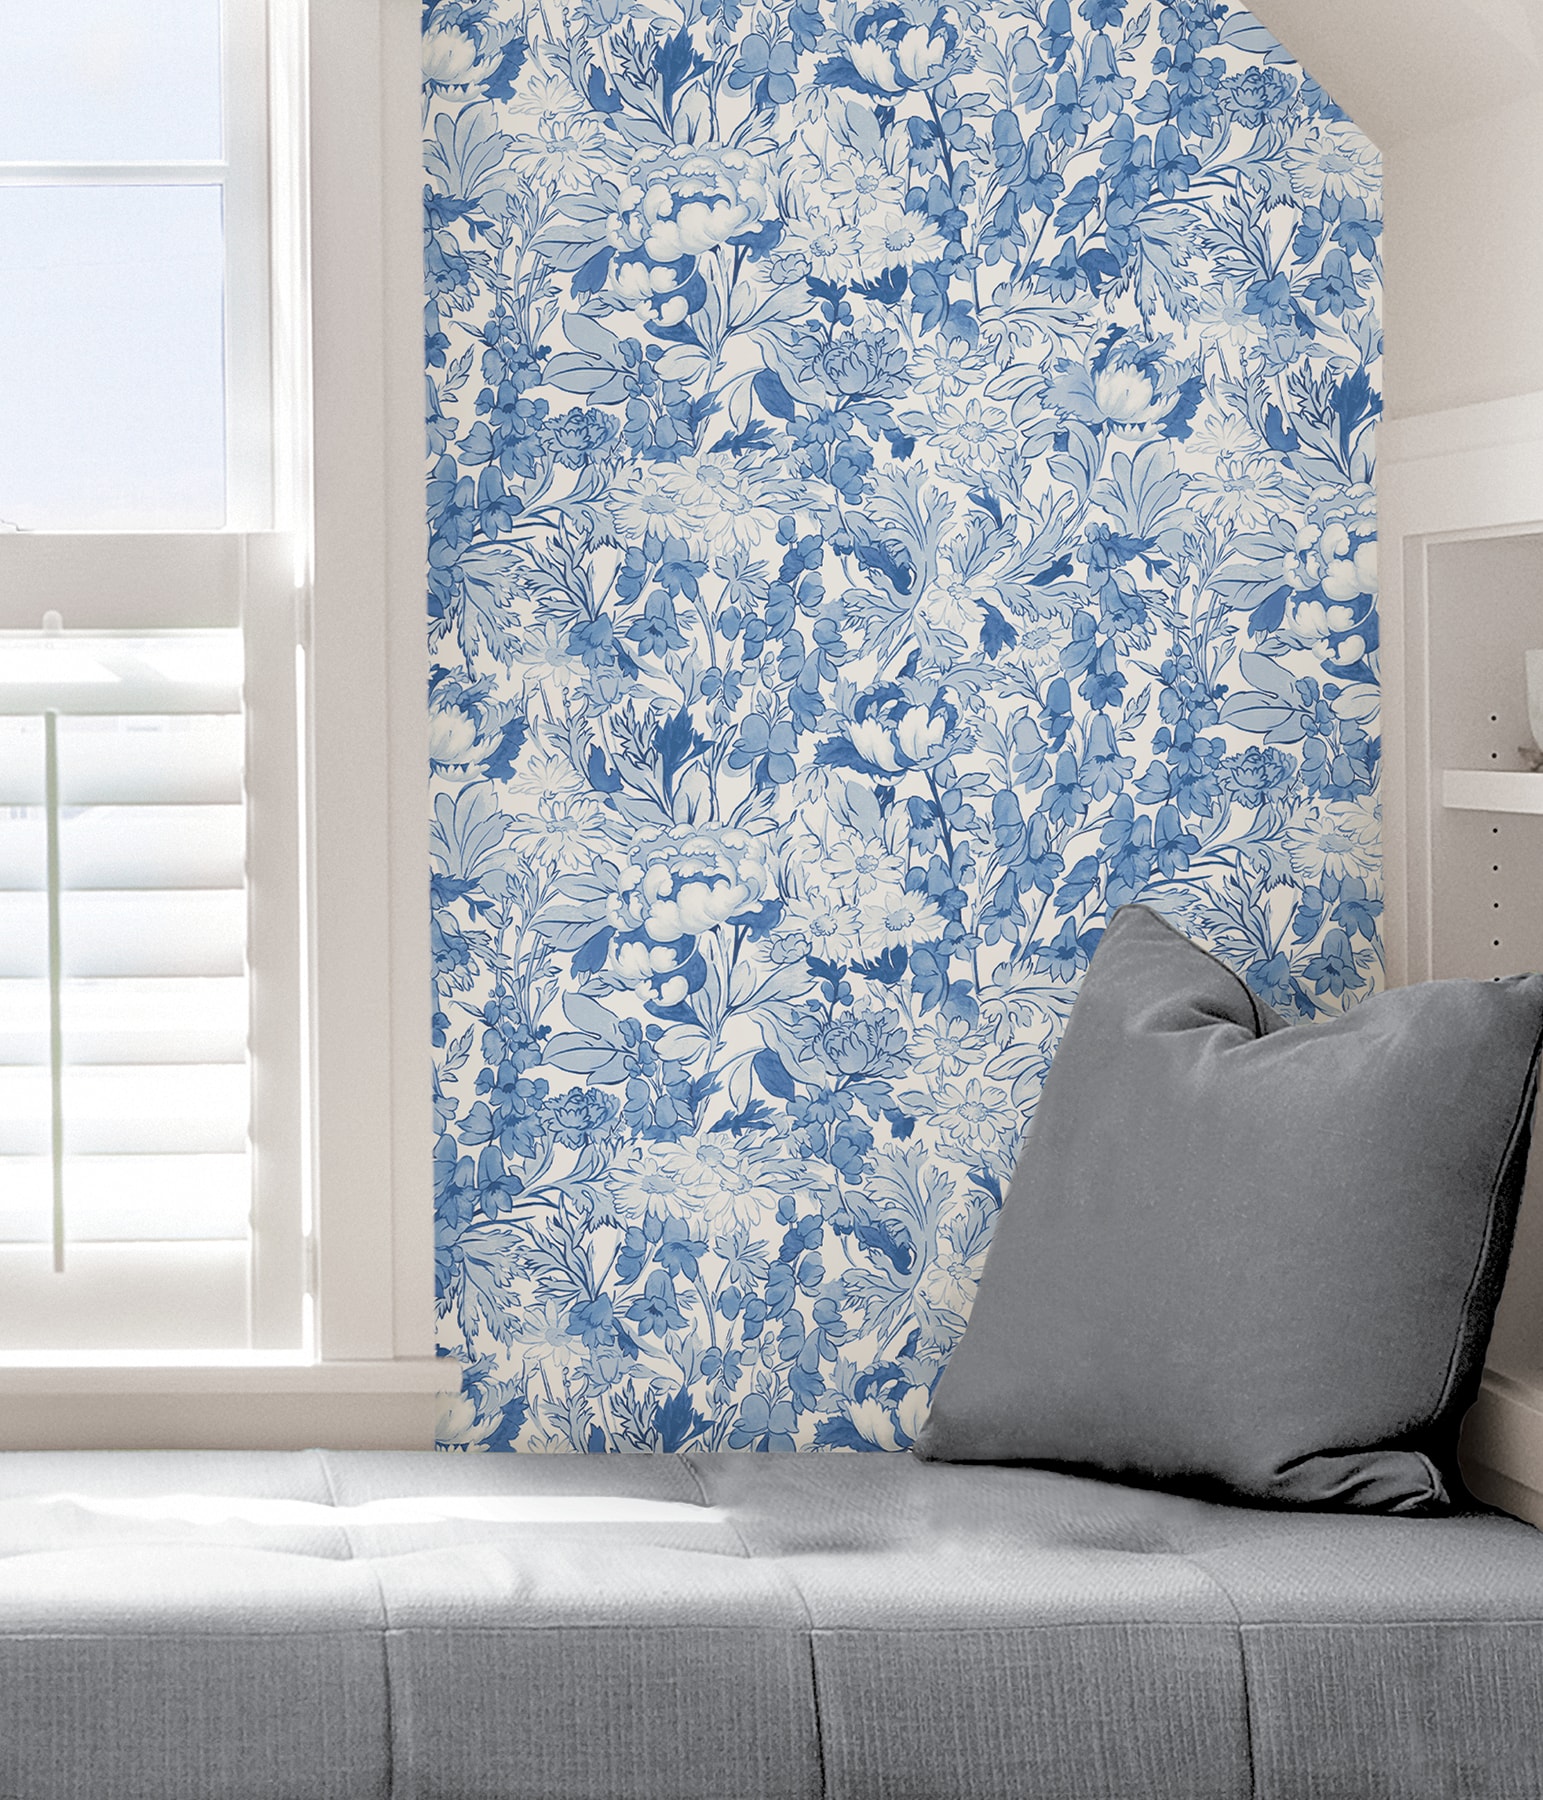 Vera Bradley 3131sq ft Blue Vinyl Floral Selfadhesive Peel and Stick  Wallpaper in the Wallpaper department at Lowescom